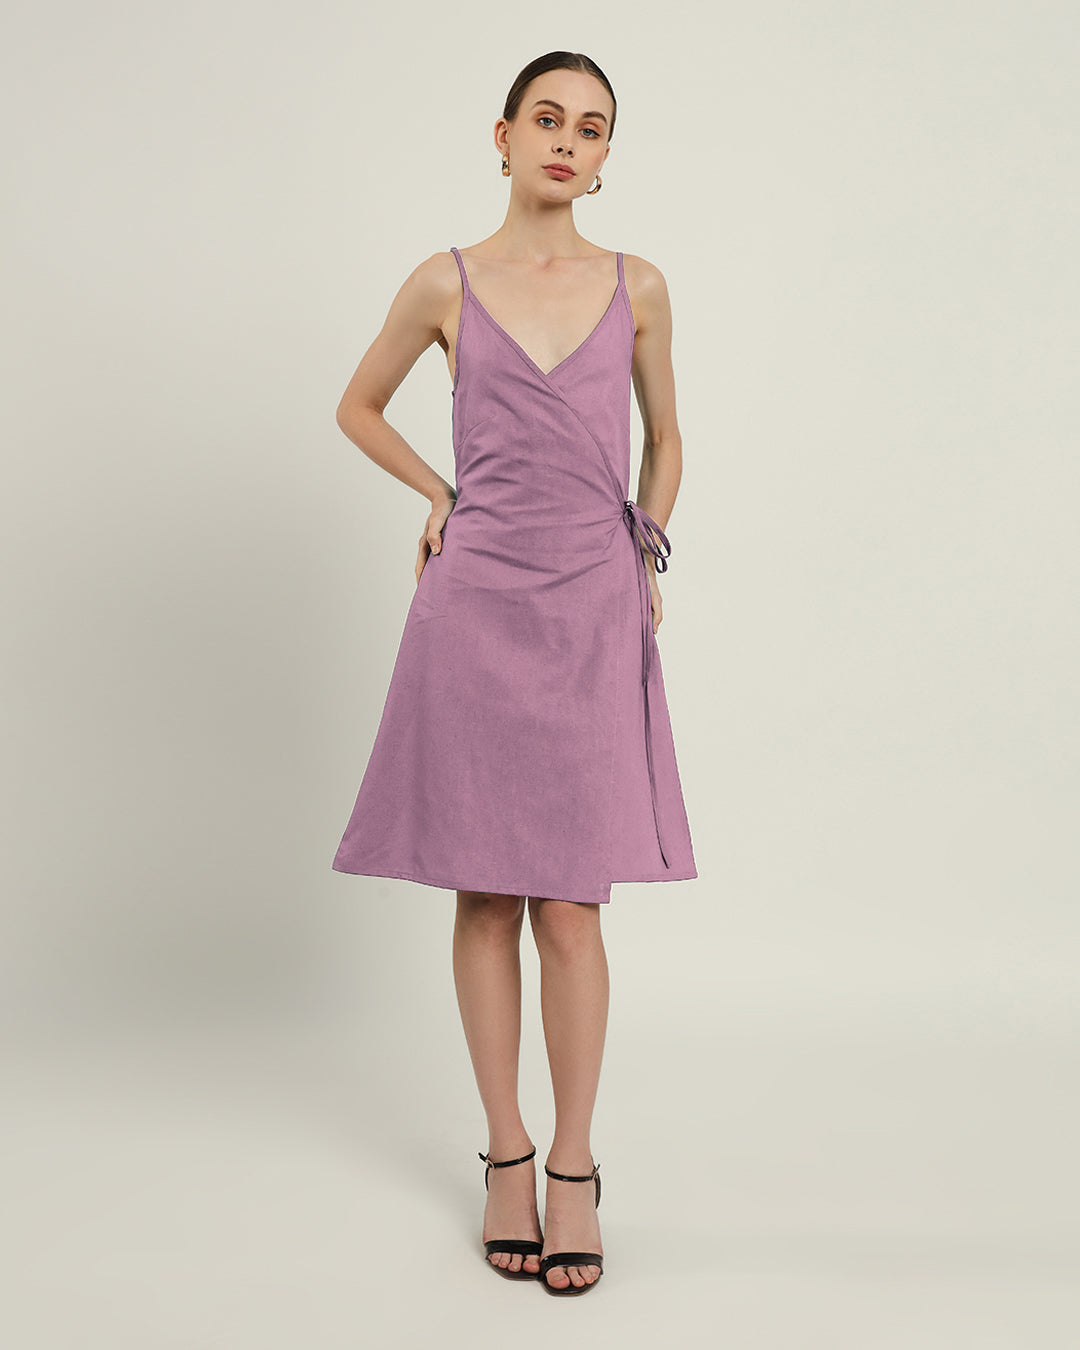 The Chambéry Purple Swirl Cotton Dress